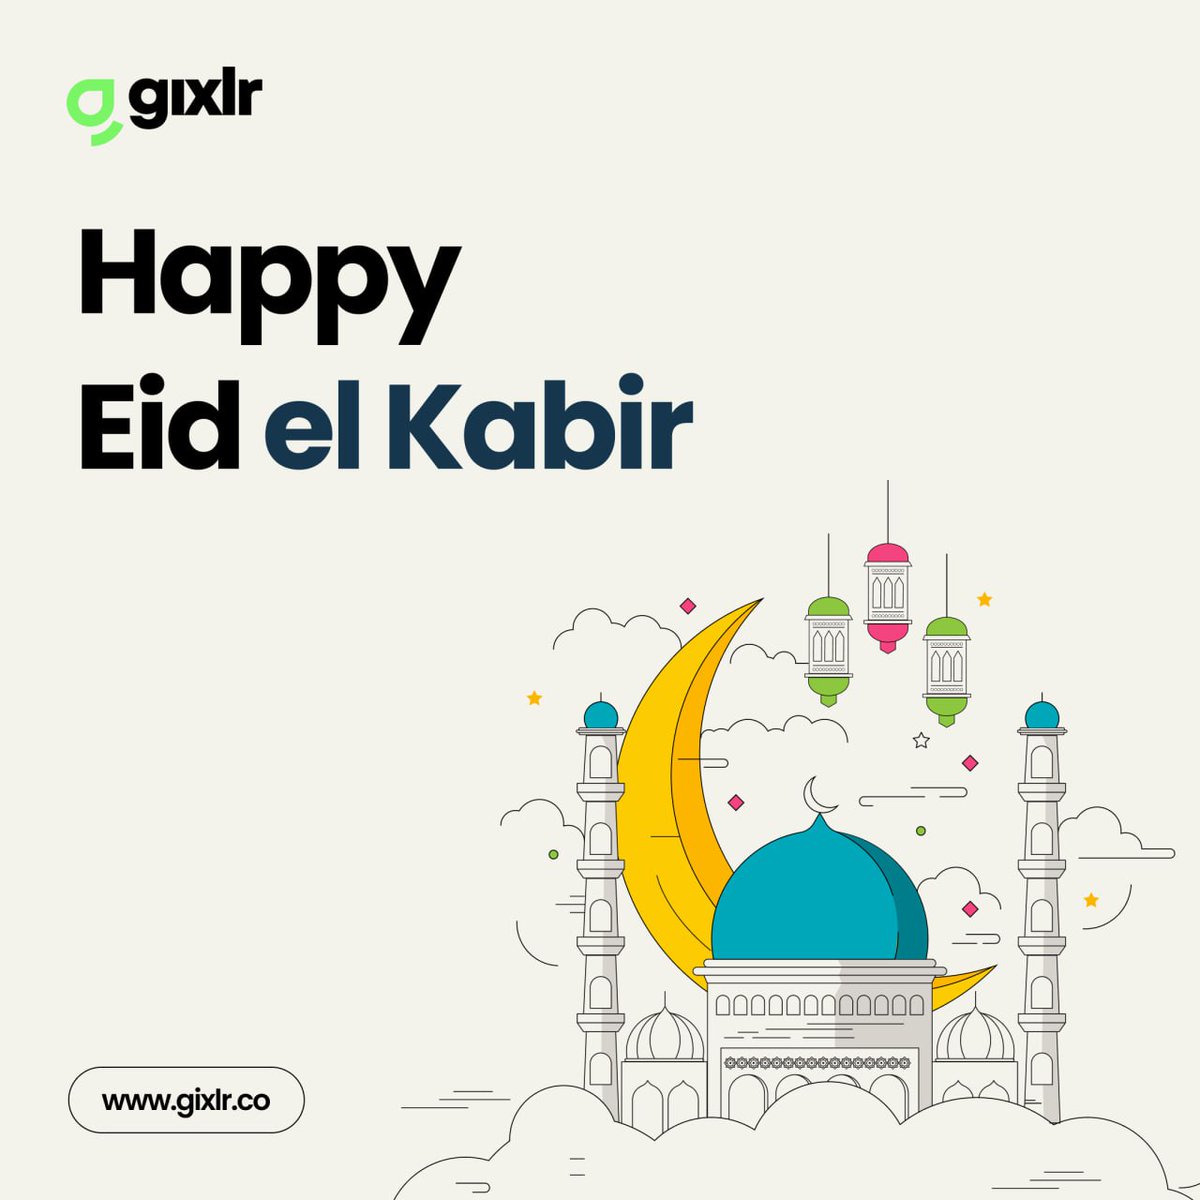 Happy Eid el Kabir to all the muslim faithful. 

It is a public holiday so celebrate with your loved ones and rest well. 

#gixlr #creatives #EidAlAdha #EidMubarak #eidelkabir